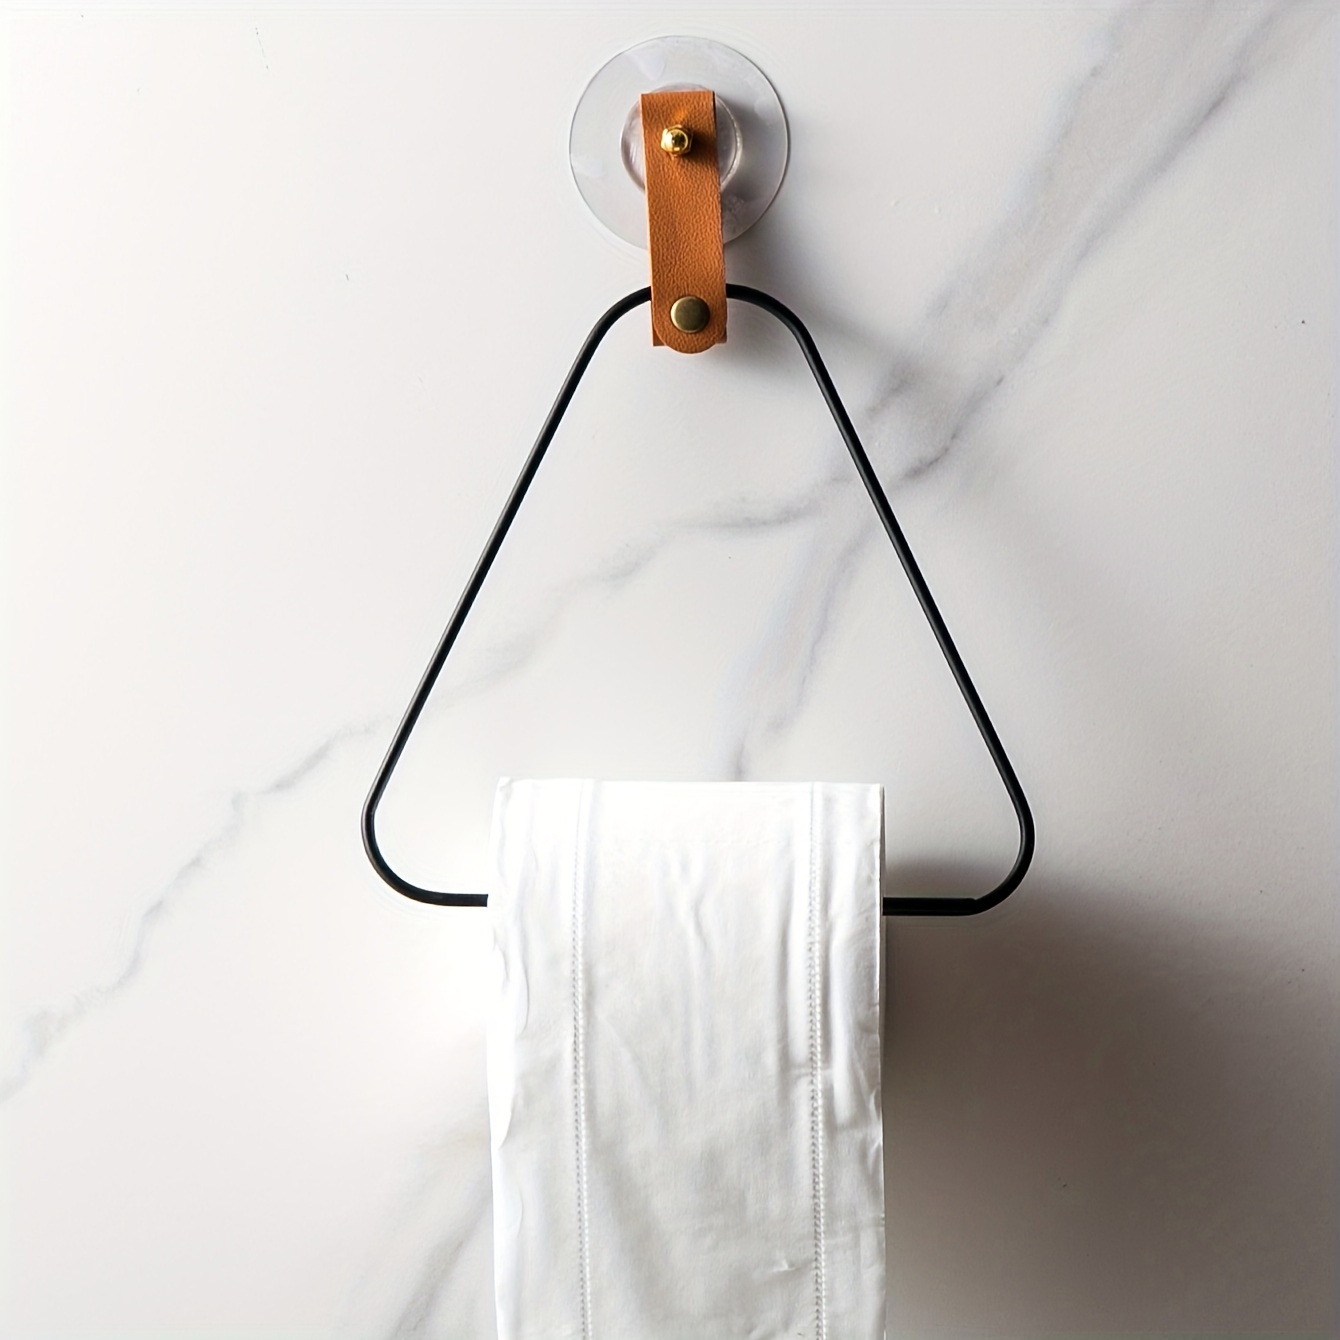 Self-Adhesive Paper Towel Holders For Kitchen Bathroom Tissue Holder  Hanging Toilet Paper Holder Roll Paper Holder Under Cabinet Towel Rack  Stand Home Rack, Carbon Steel Toilet Paper Roll, No Drilling for Bathroom